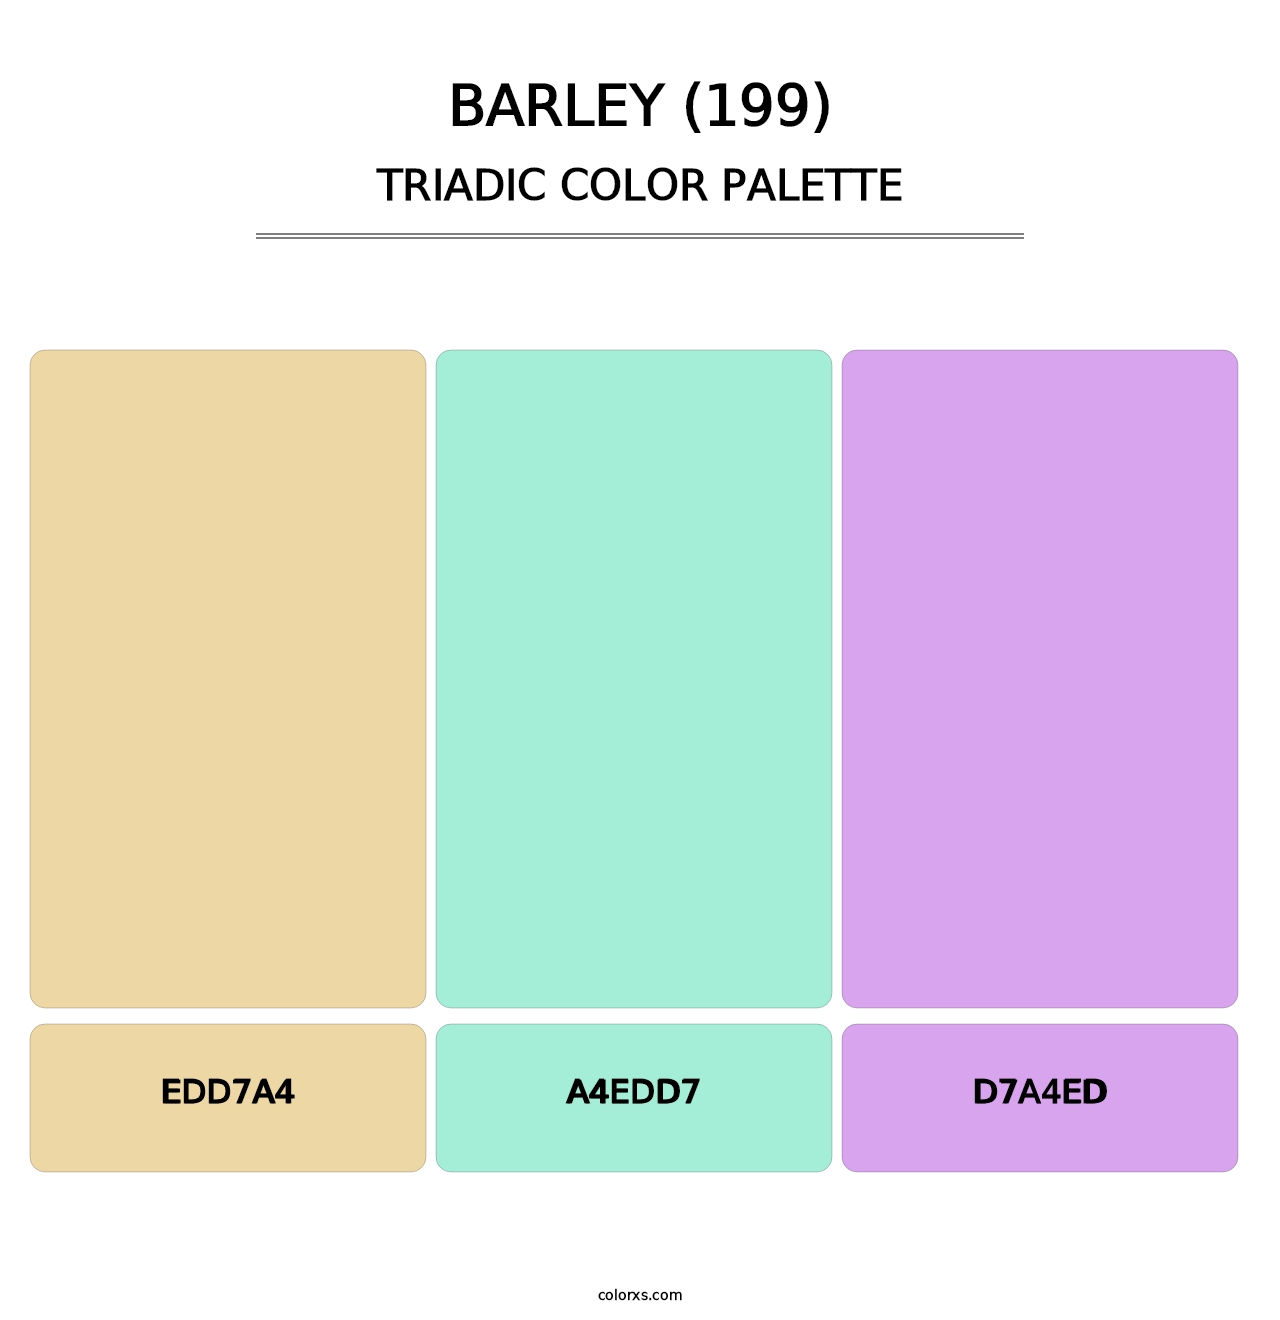 Barley (199) - Triadic Color Palette